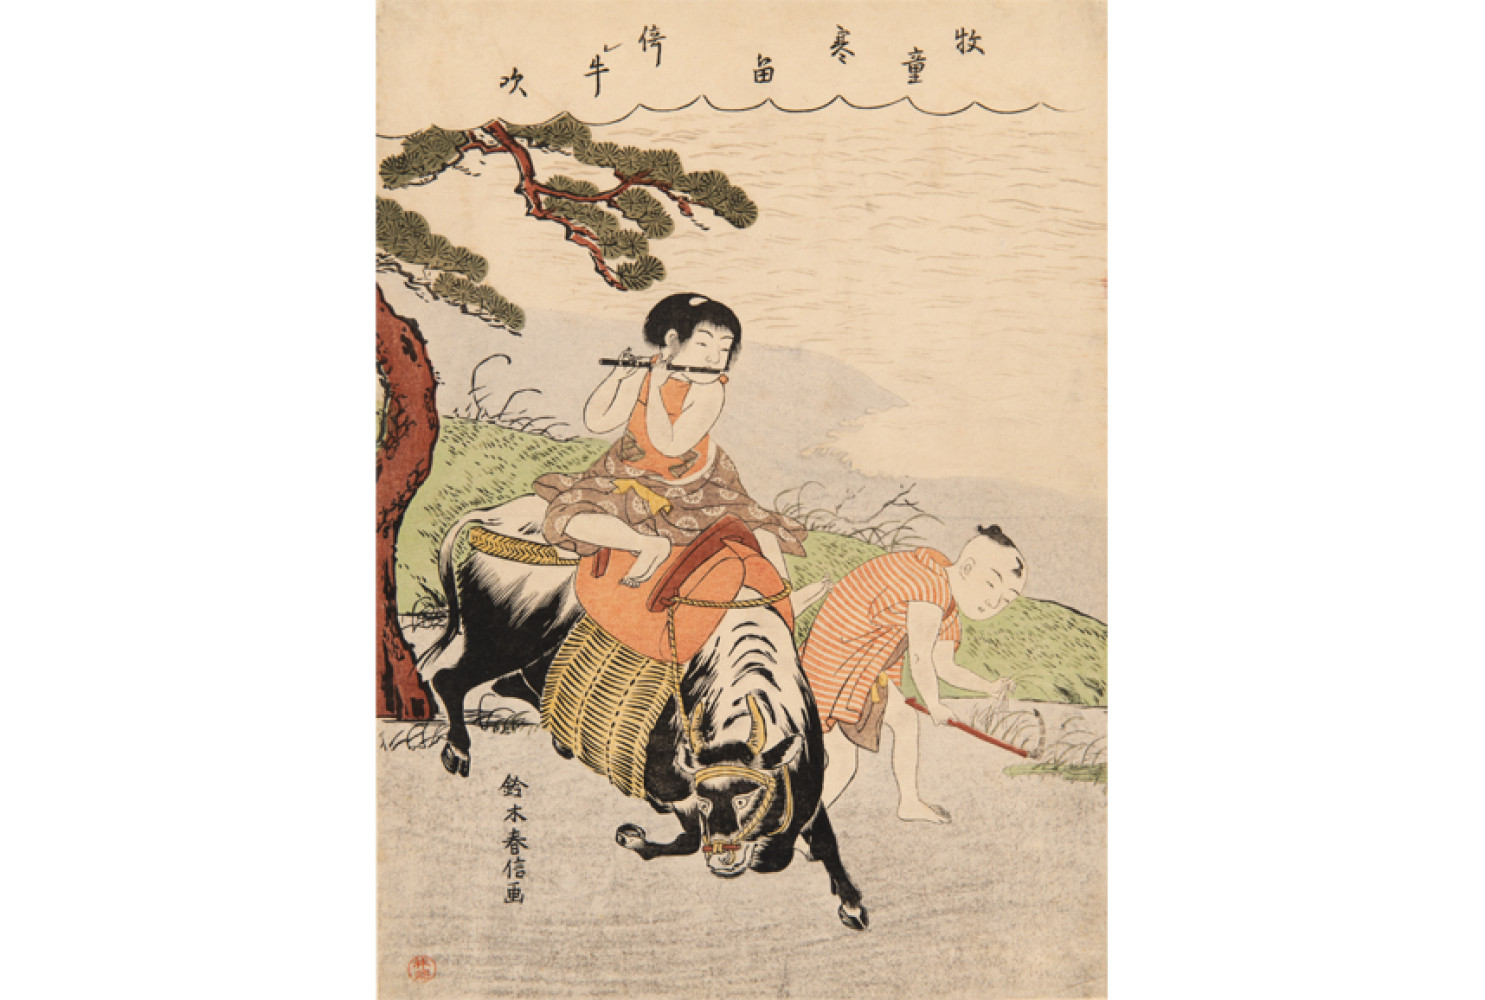 SUZUKI HARUNOBU (1724—1770) Oxherd Playing his Cold Flute, ca. 1768. Color woodblock print, 11 x 8 1/4 inches